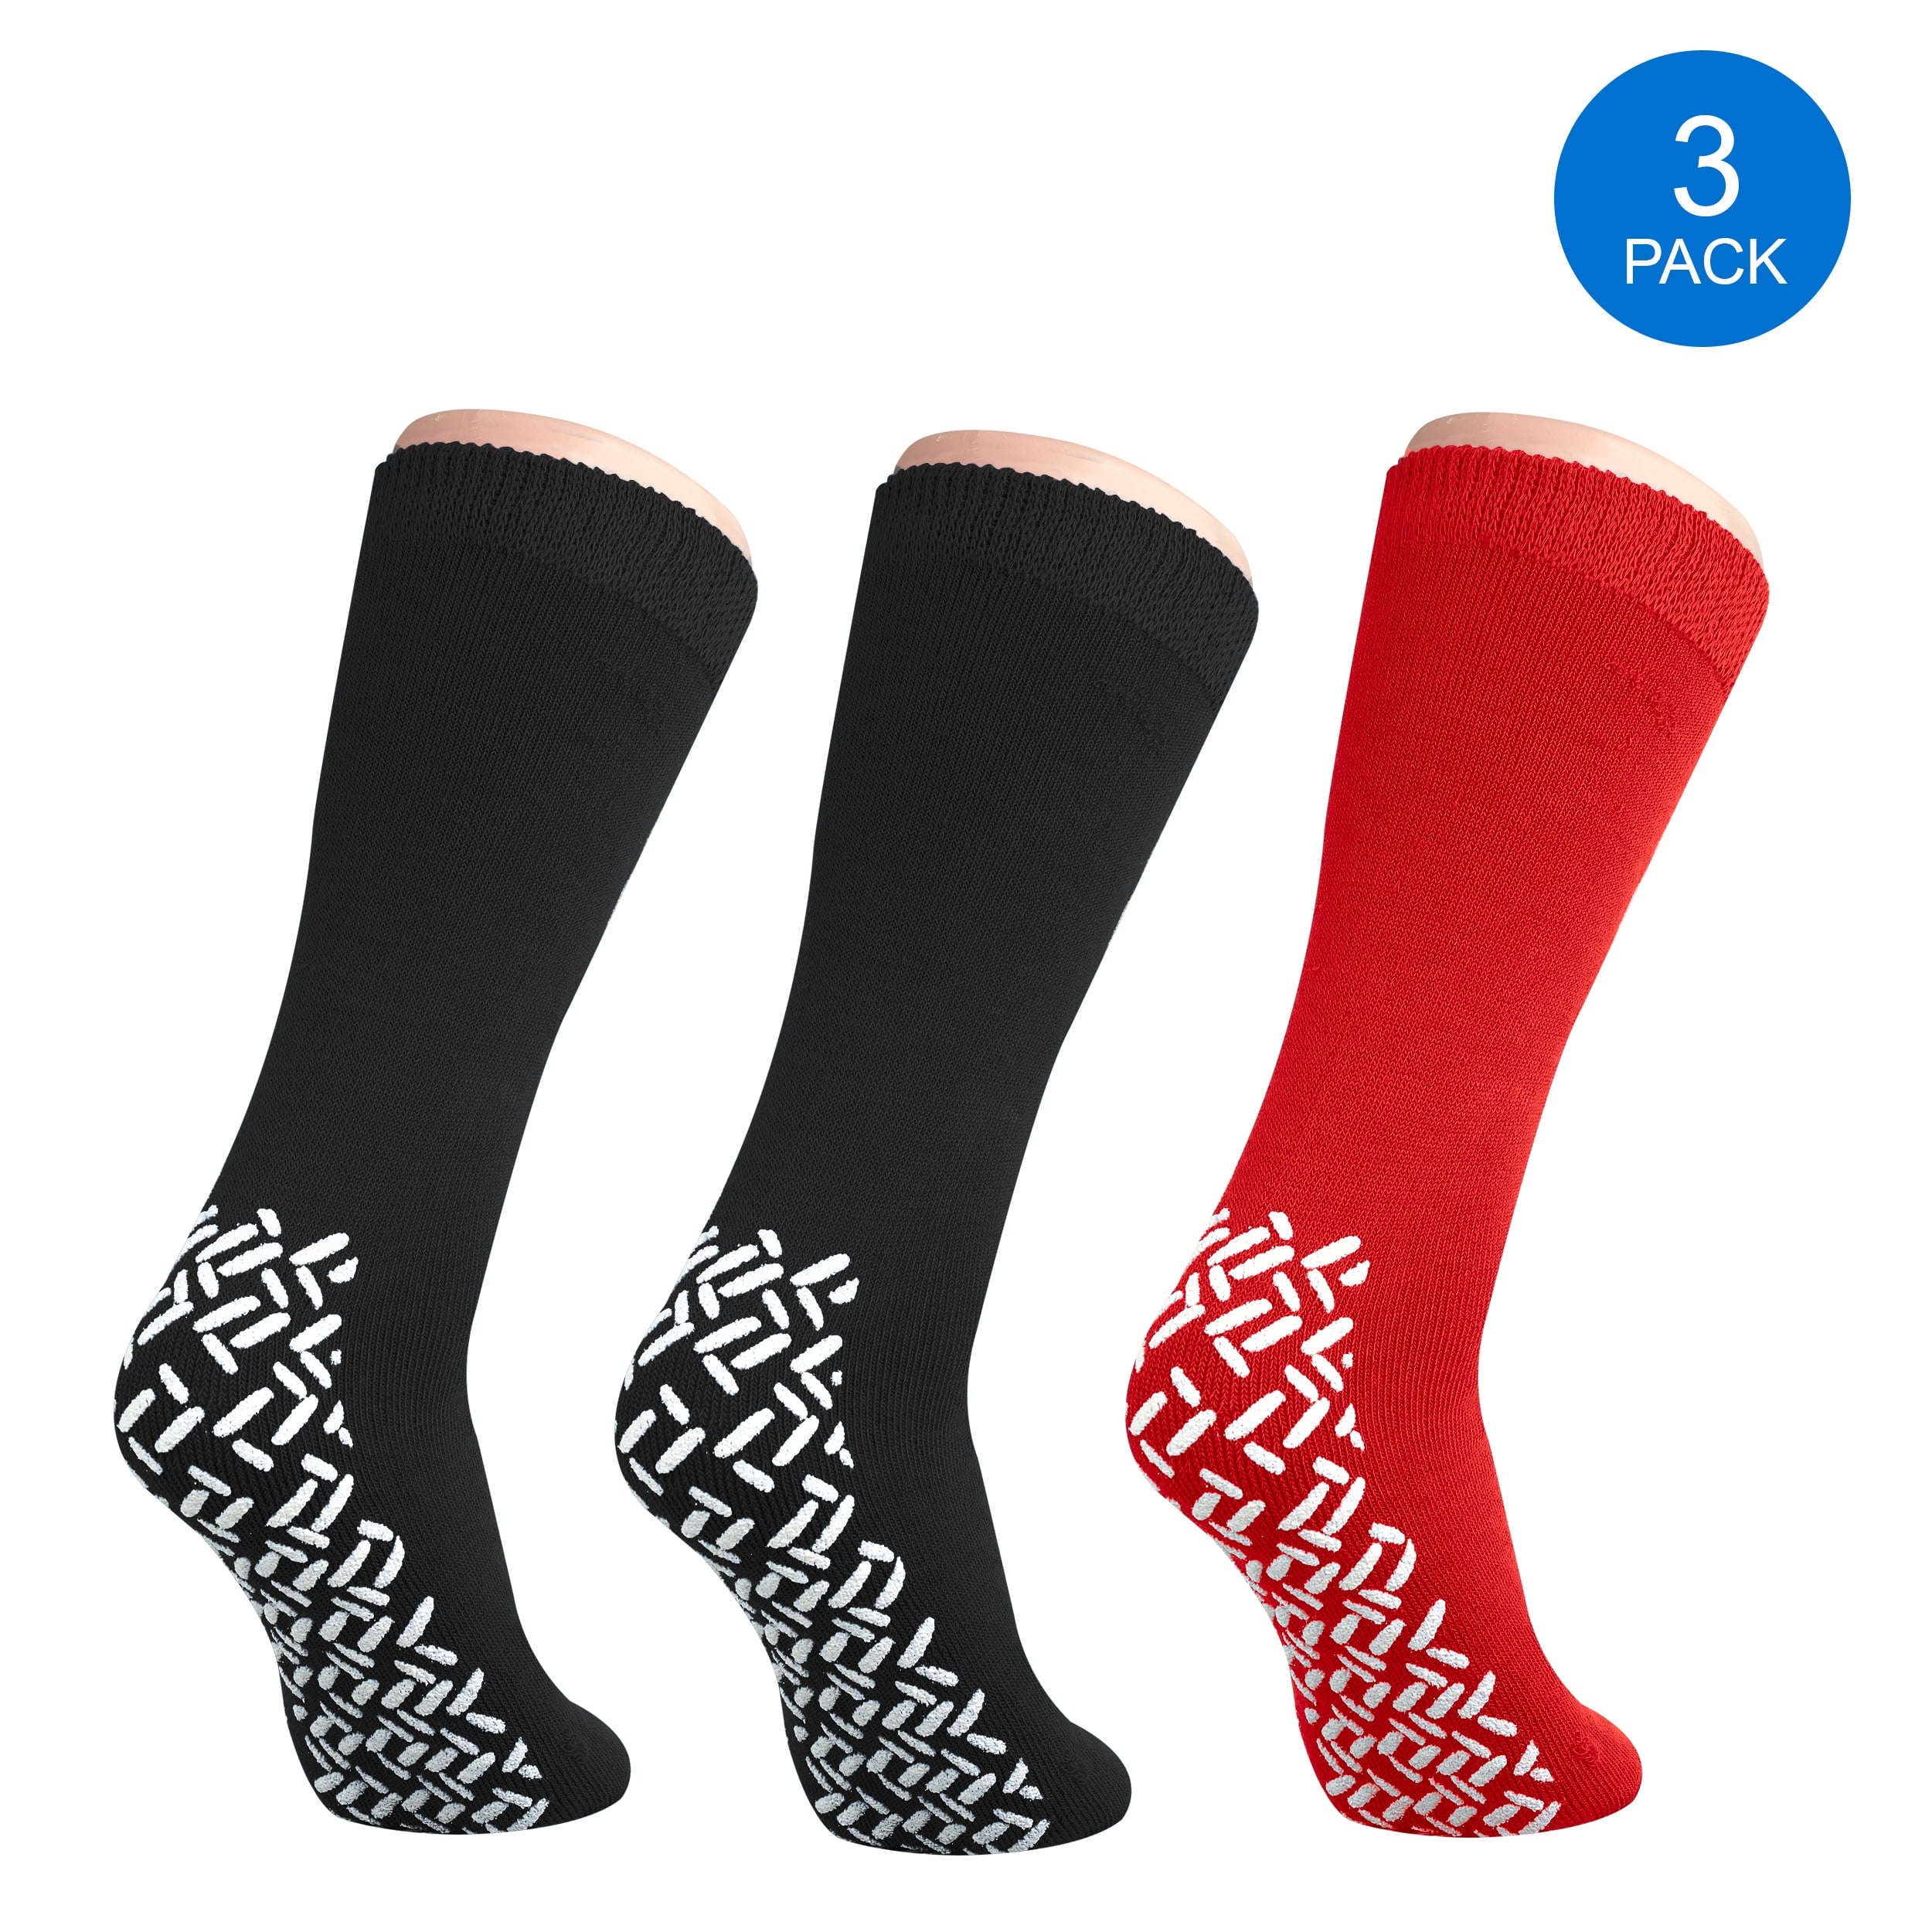 Pack of 3 Pairs - XXXL Non-Skid Bariatric Extra Wide Slipper Socks